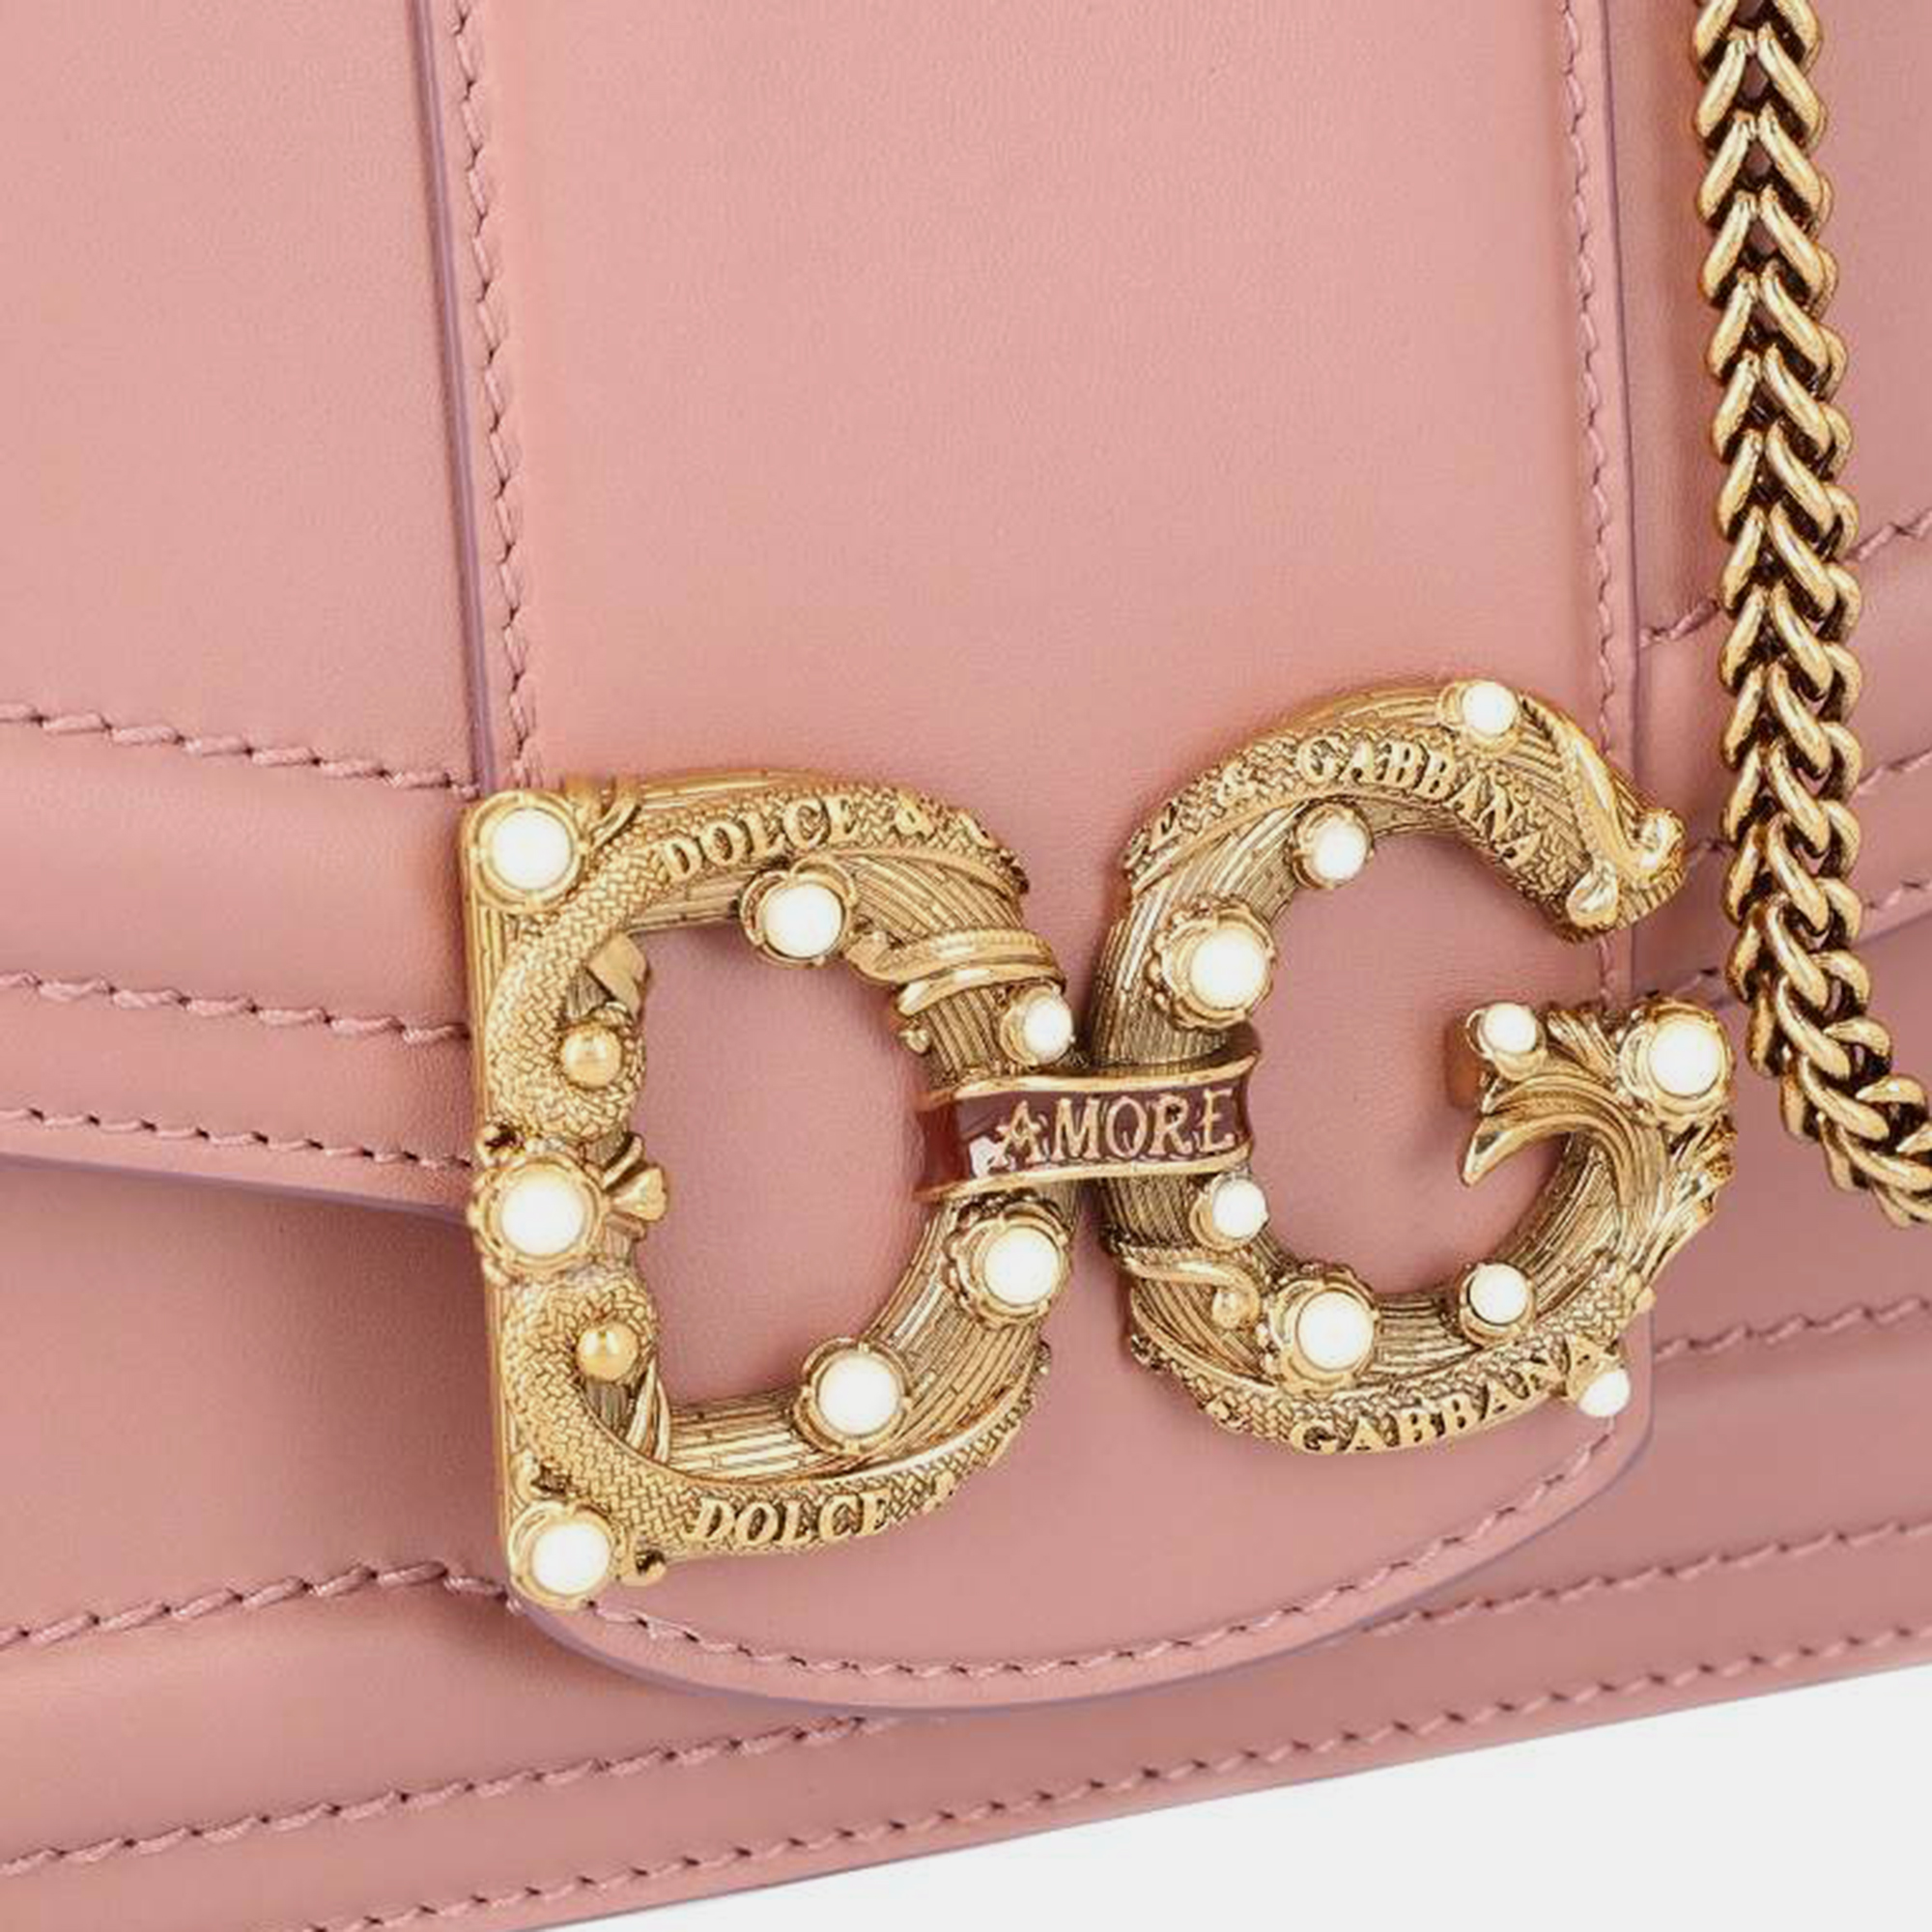 Dolce & Gabbana Blush Pink Leather DG Amore Bag